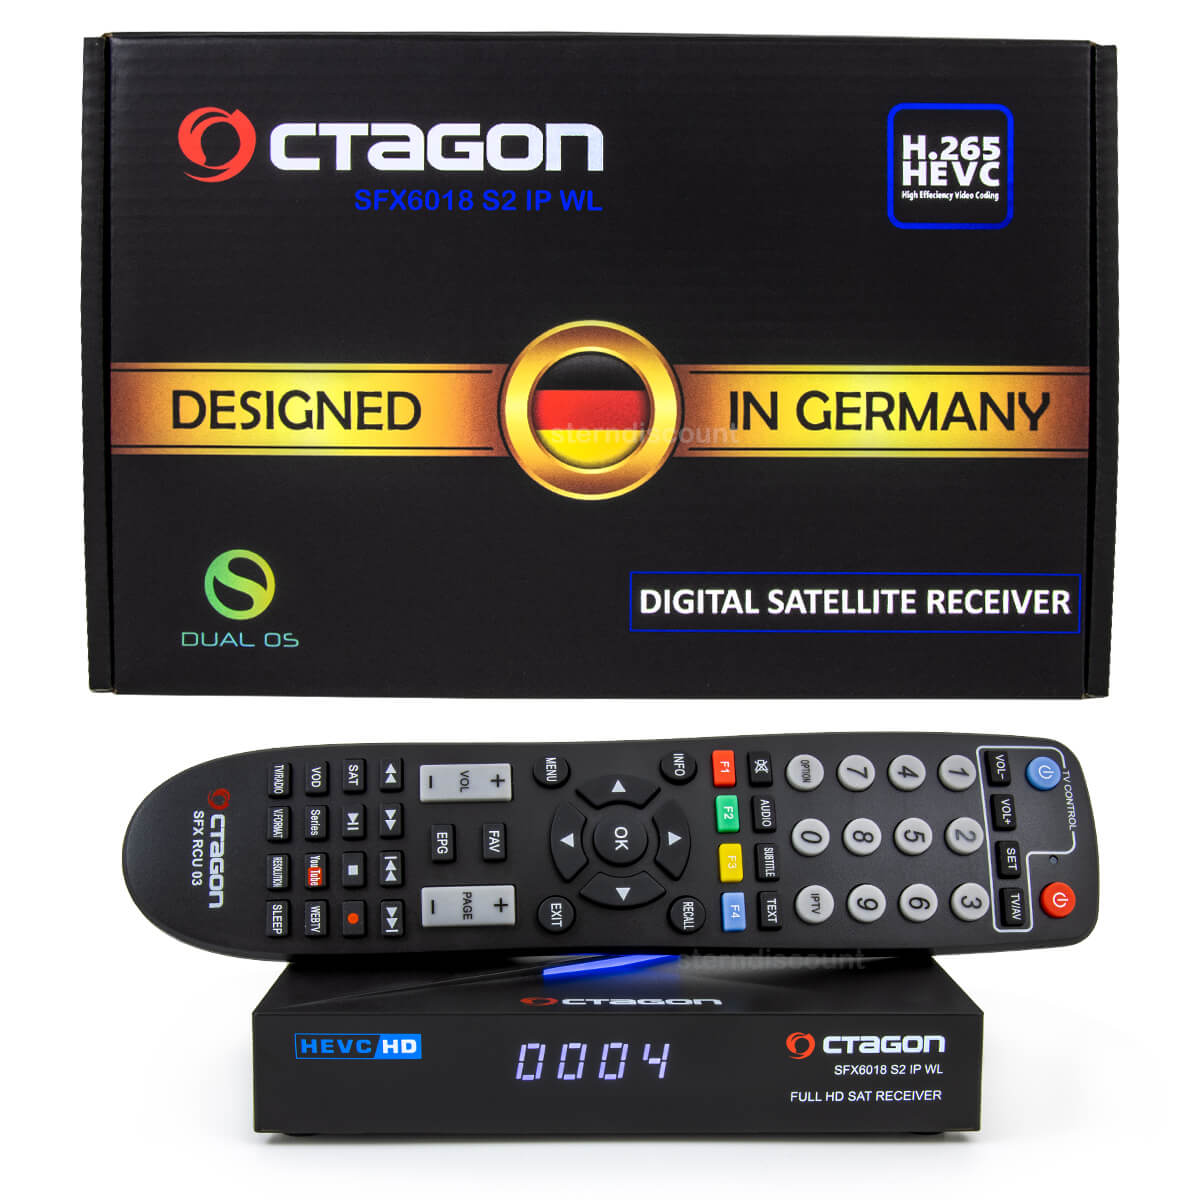 Octagon SFX6018 S2 IP WL mit Wlan Linux E2 HD SAT-Receiver